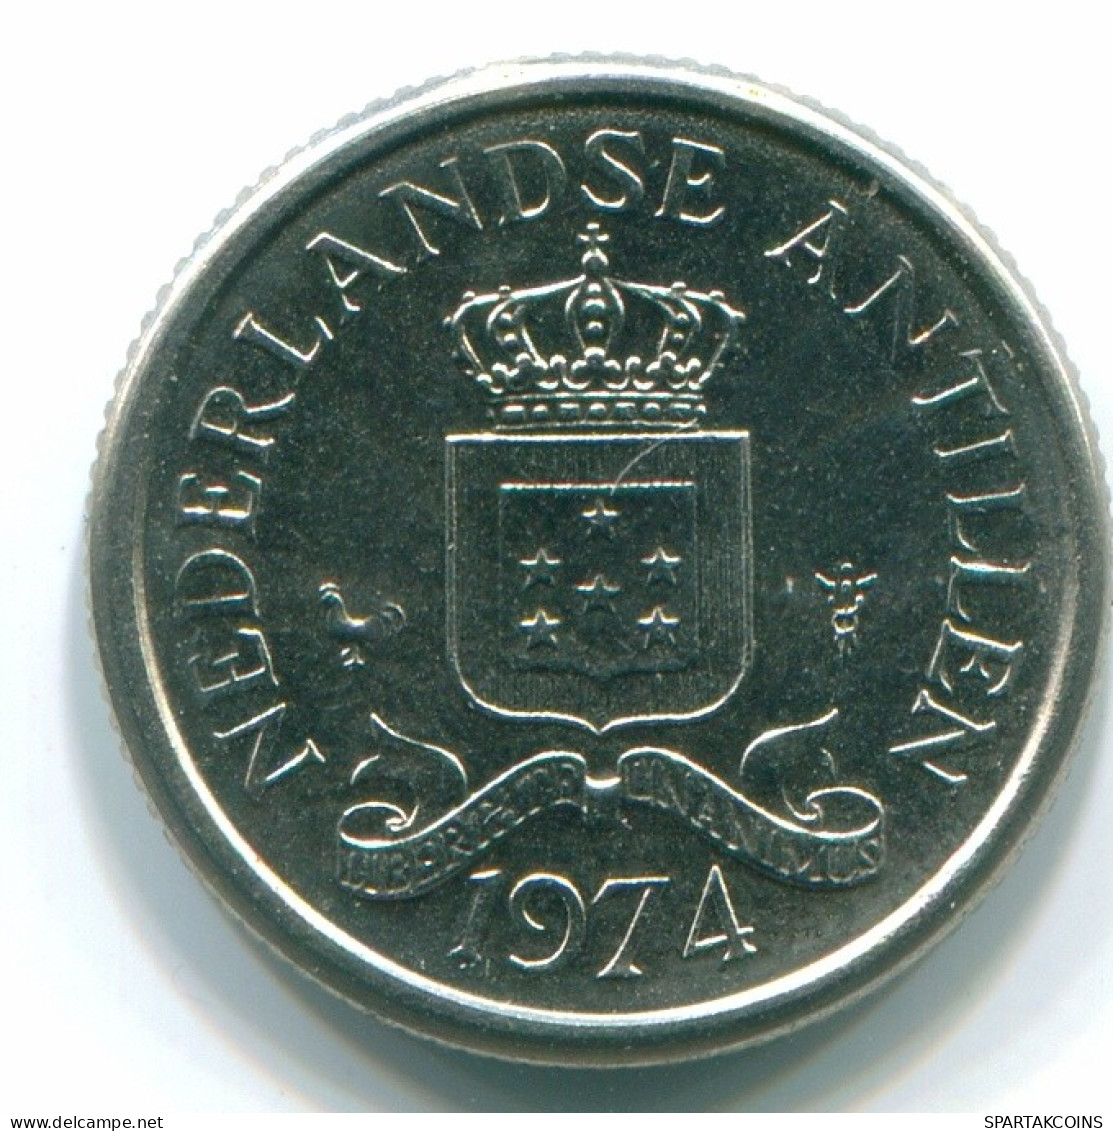 10 CENTS 1974 NETHERLANDS ANTILLES Nickel Colonial Coin #S13512.U.A - Antilles Néerlandaises